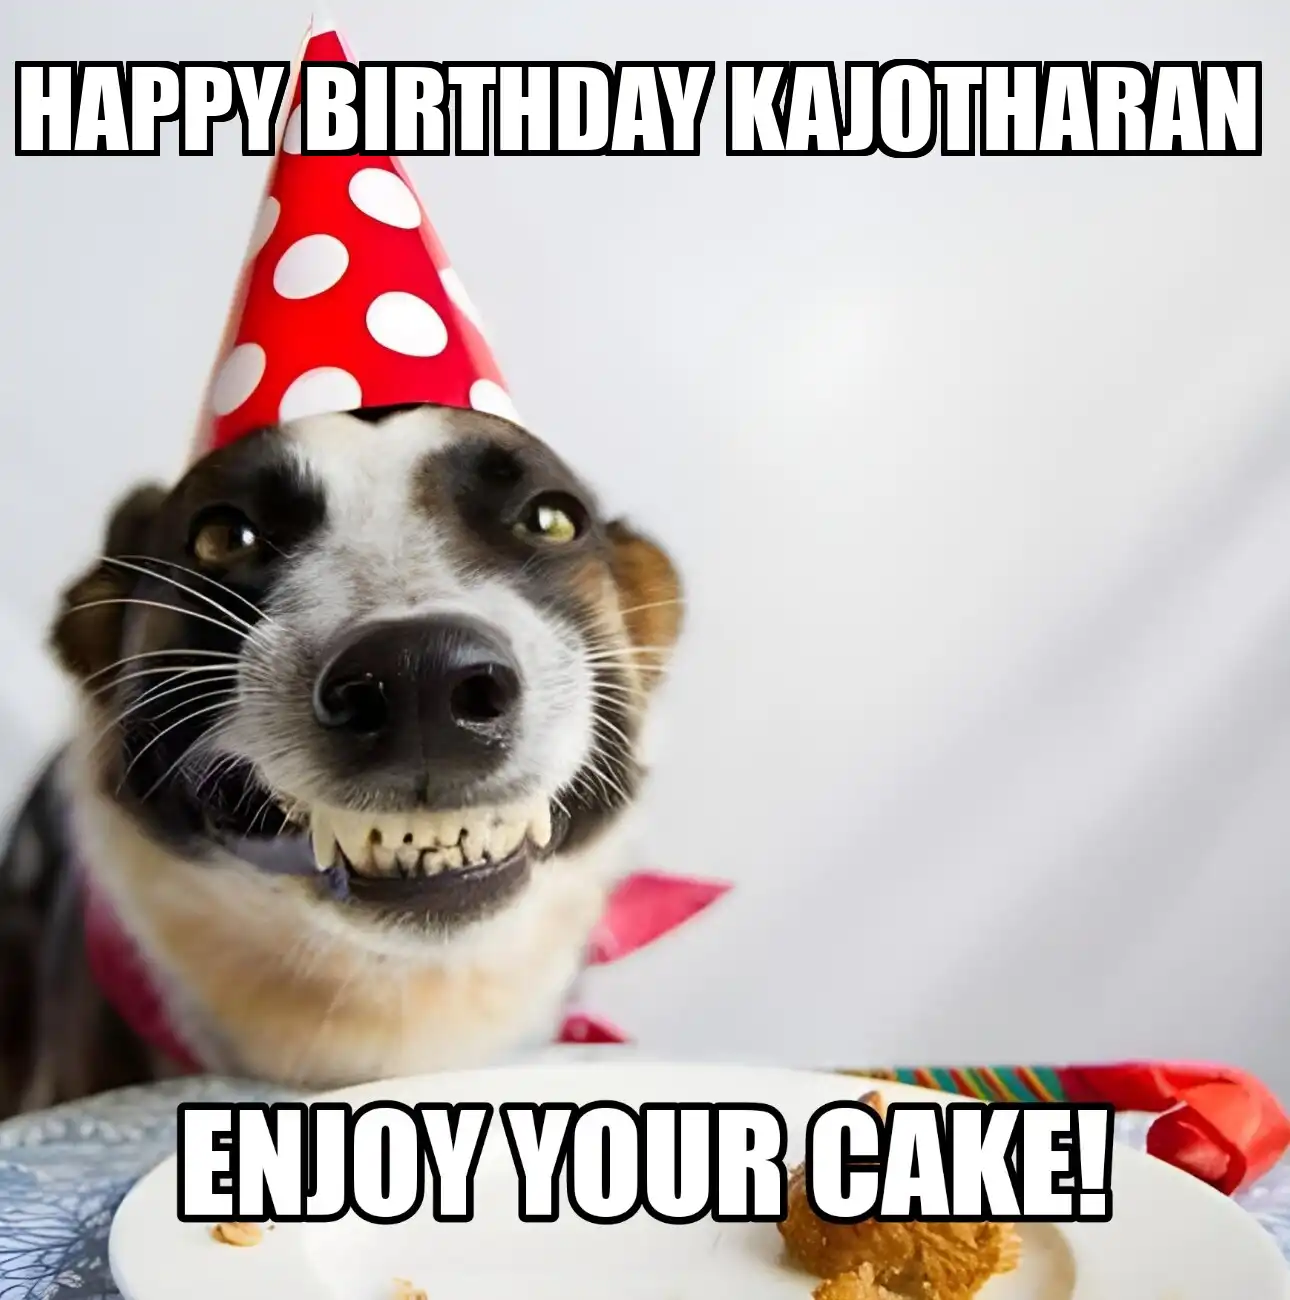 Happy Birthday Kajotharan Enjoy Your Cake Dog Meme